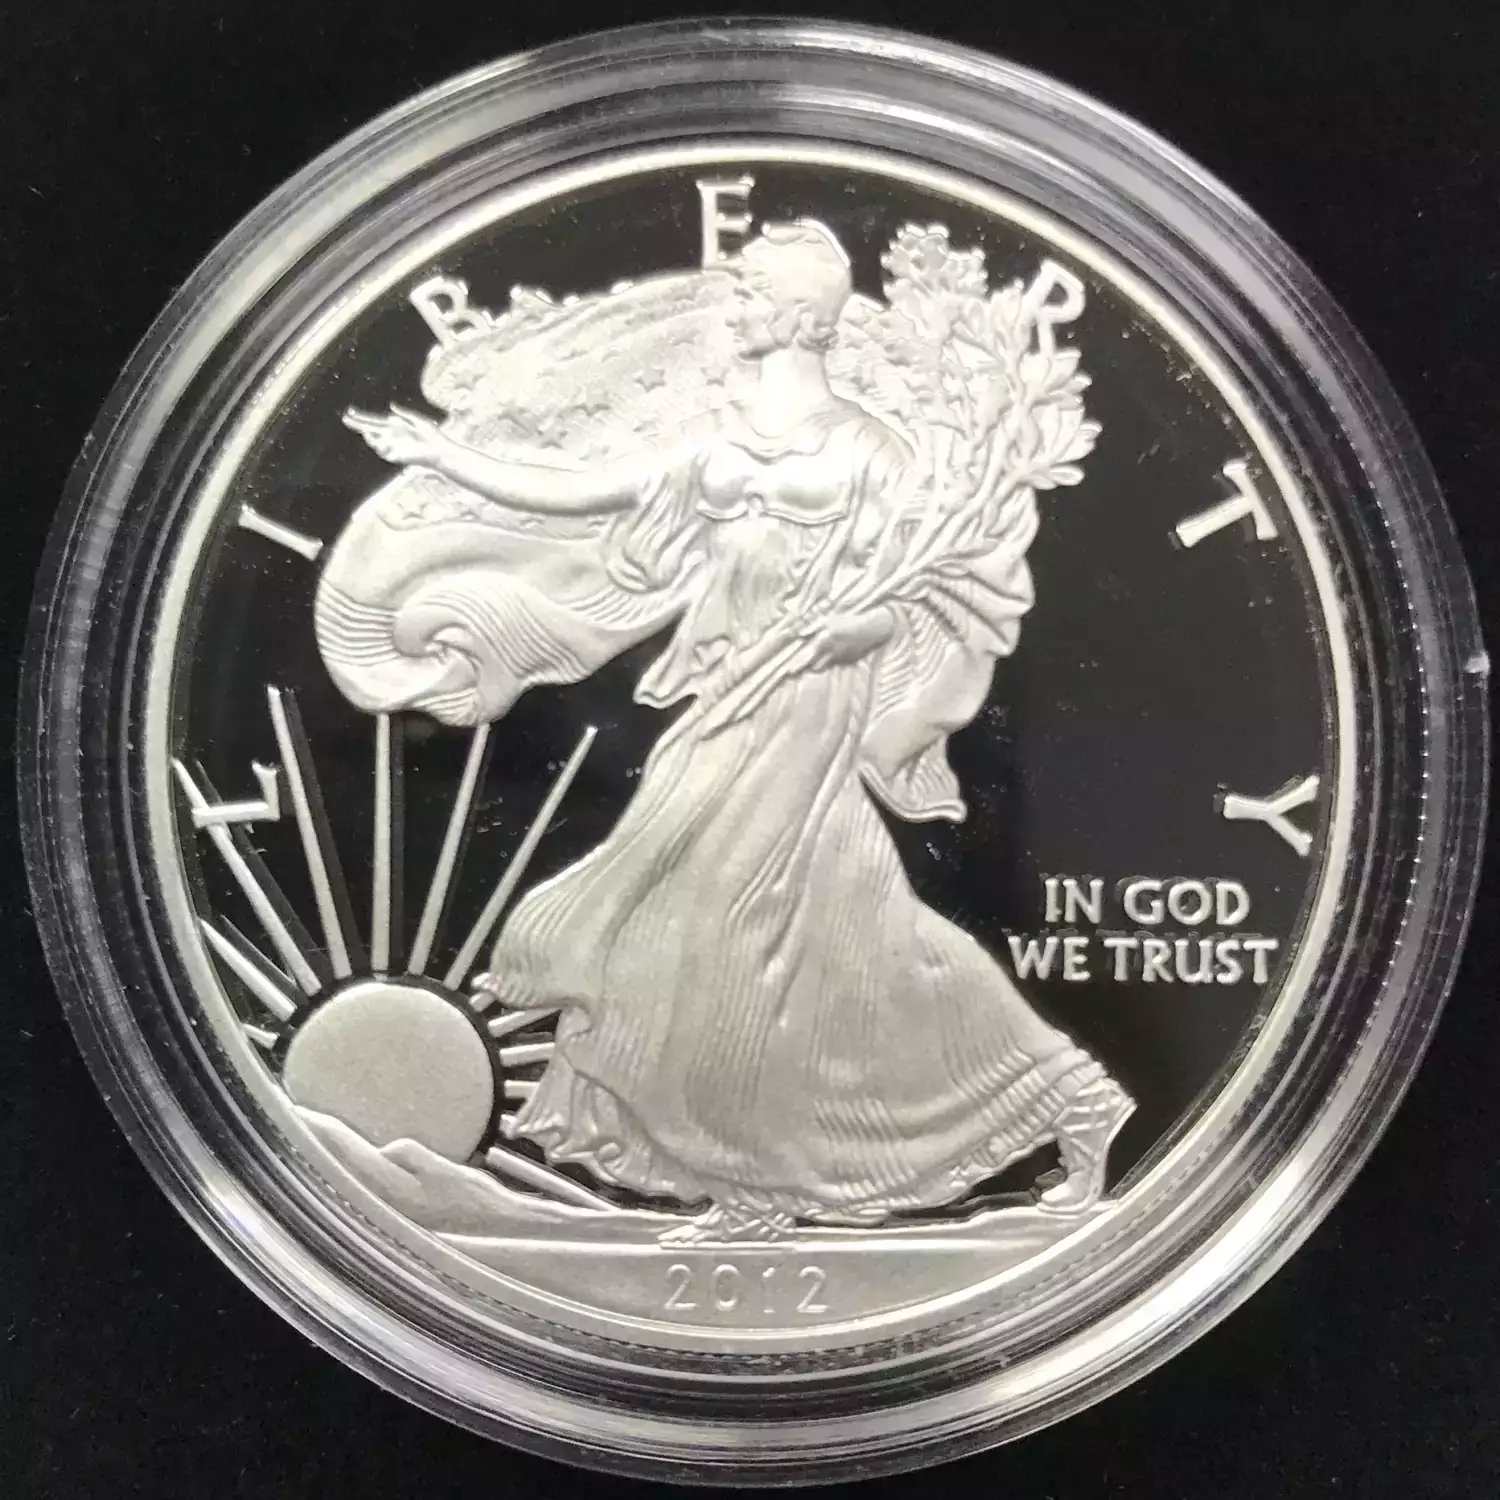 2012-S Silver Eagle San Francisco 2-Coin Proof Set w OGP Box & COA - Pf & Rev Pf